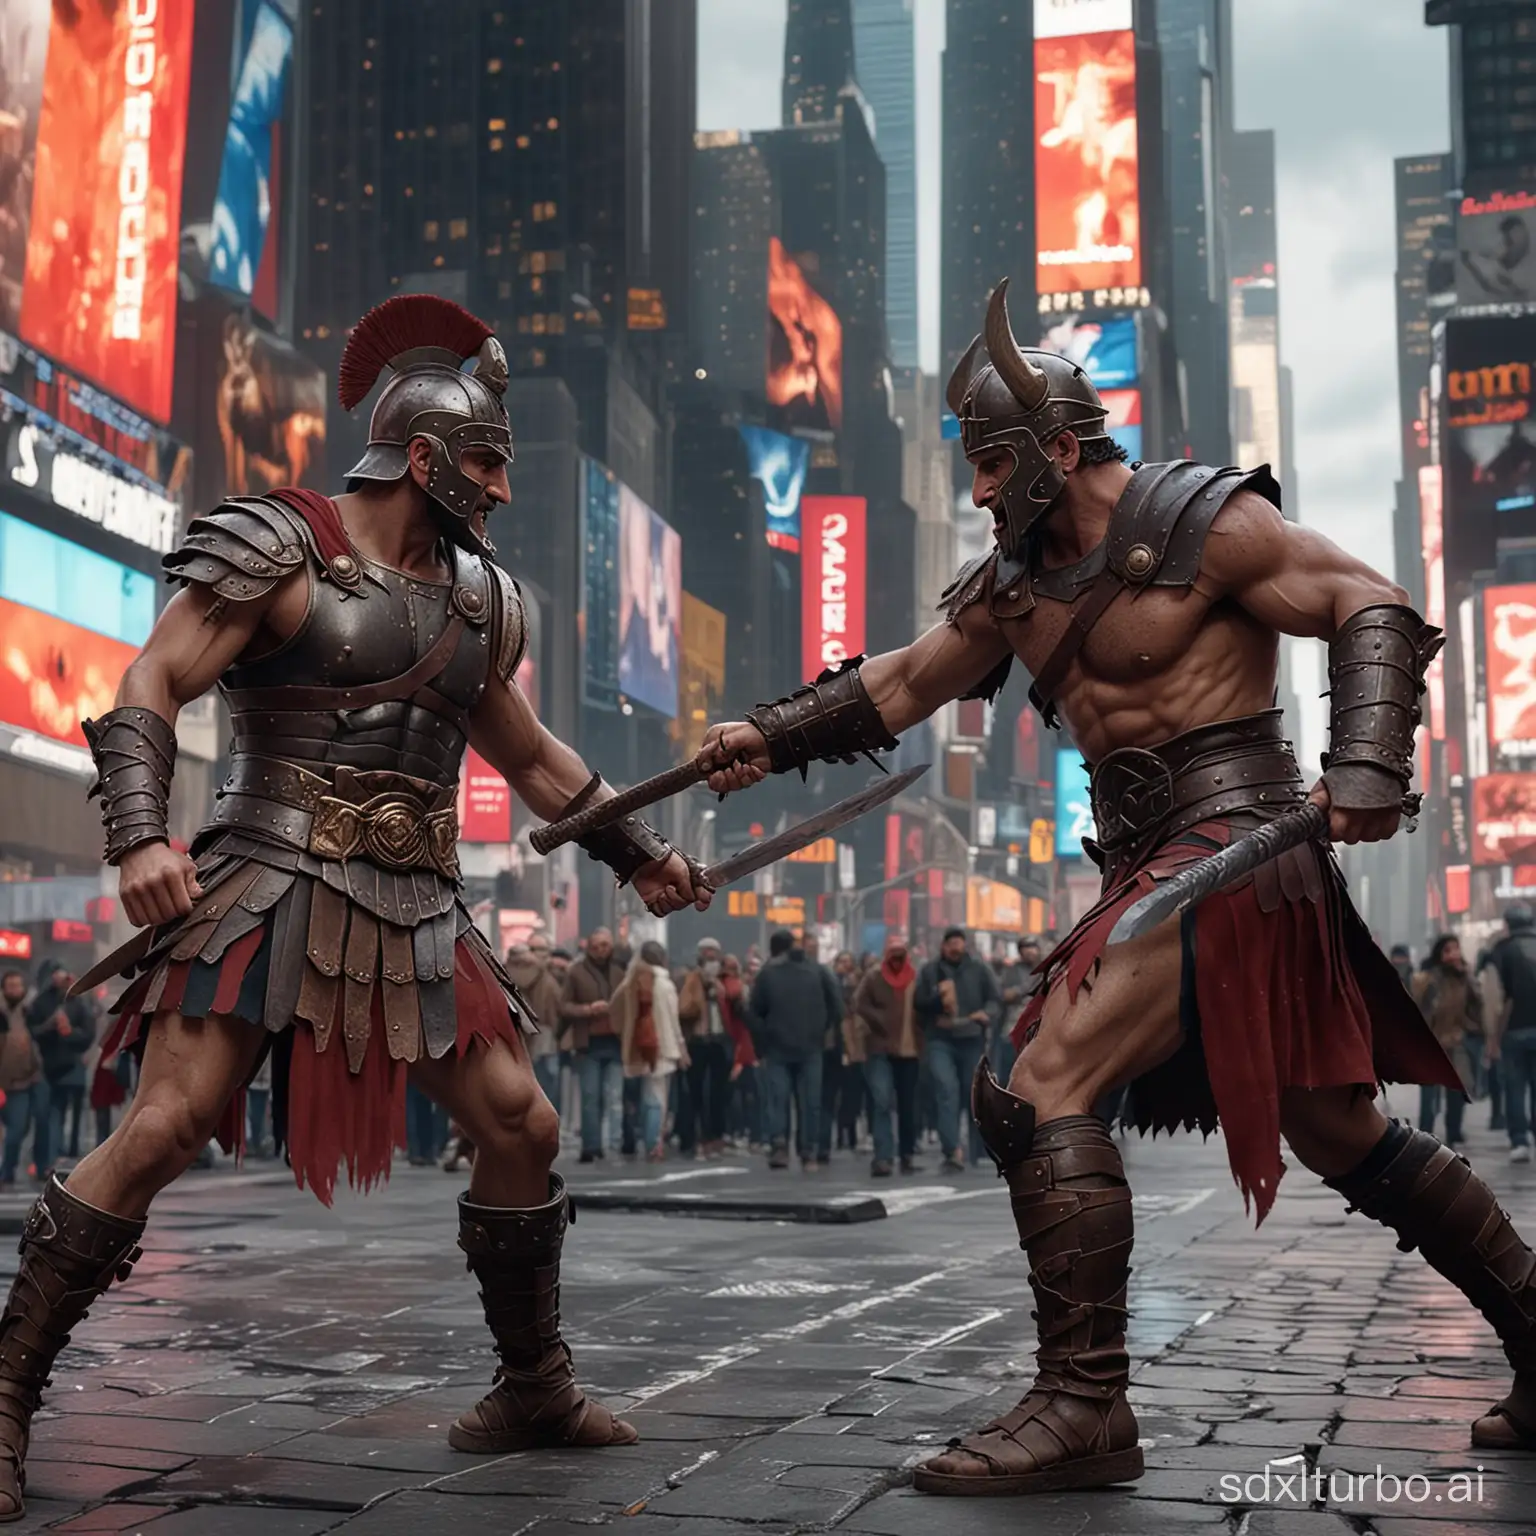 Epic-Battle-Roman-Gladiator-Confronts-Demon-in-Times-Square